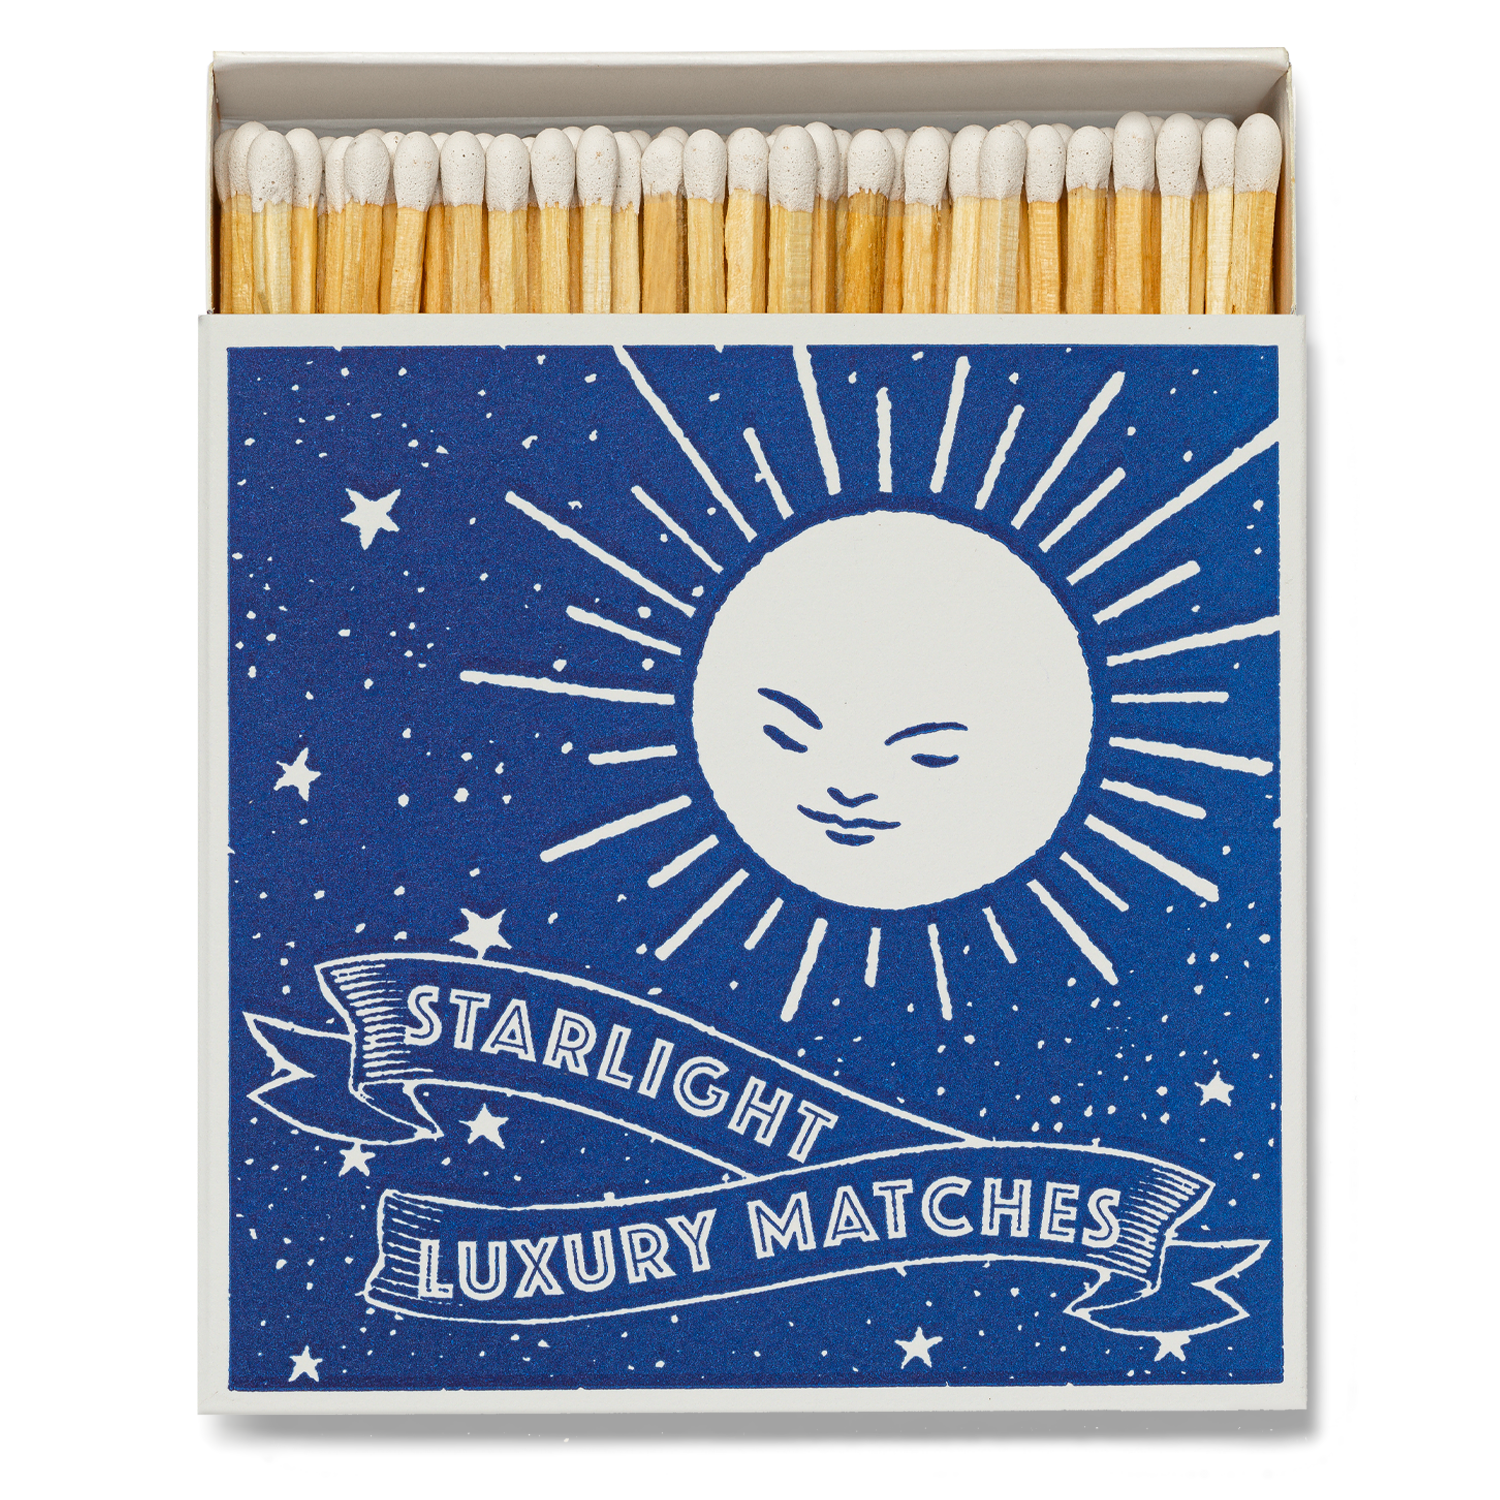 Archivist Luxury Matches - Starlight